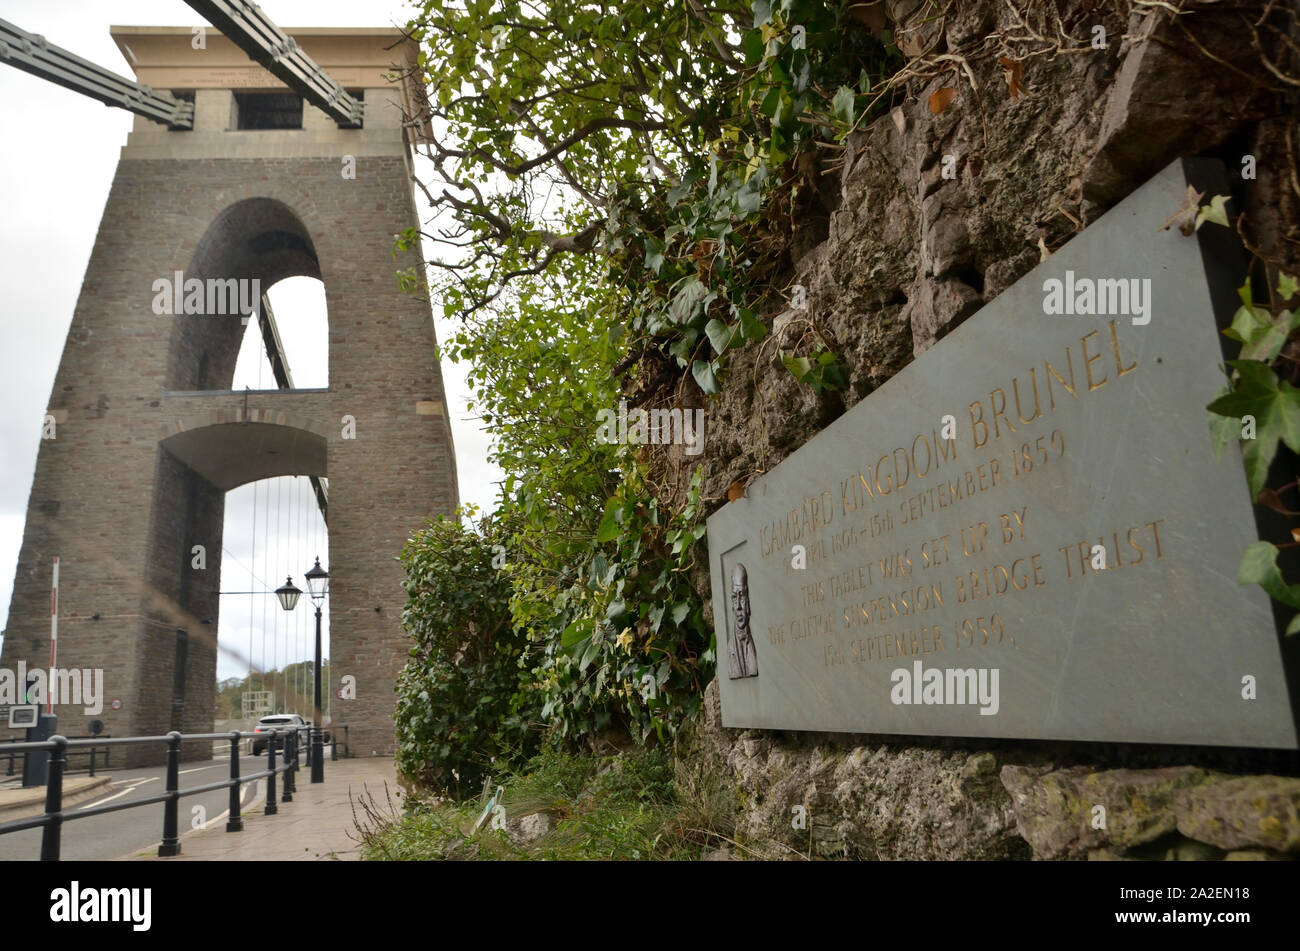 A roadside plaque to commemorate Engineer Isambard Kingdom Brunel at the Clifton Suspension Bridge, Bristol, England, UK. Stock Photo